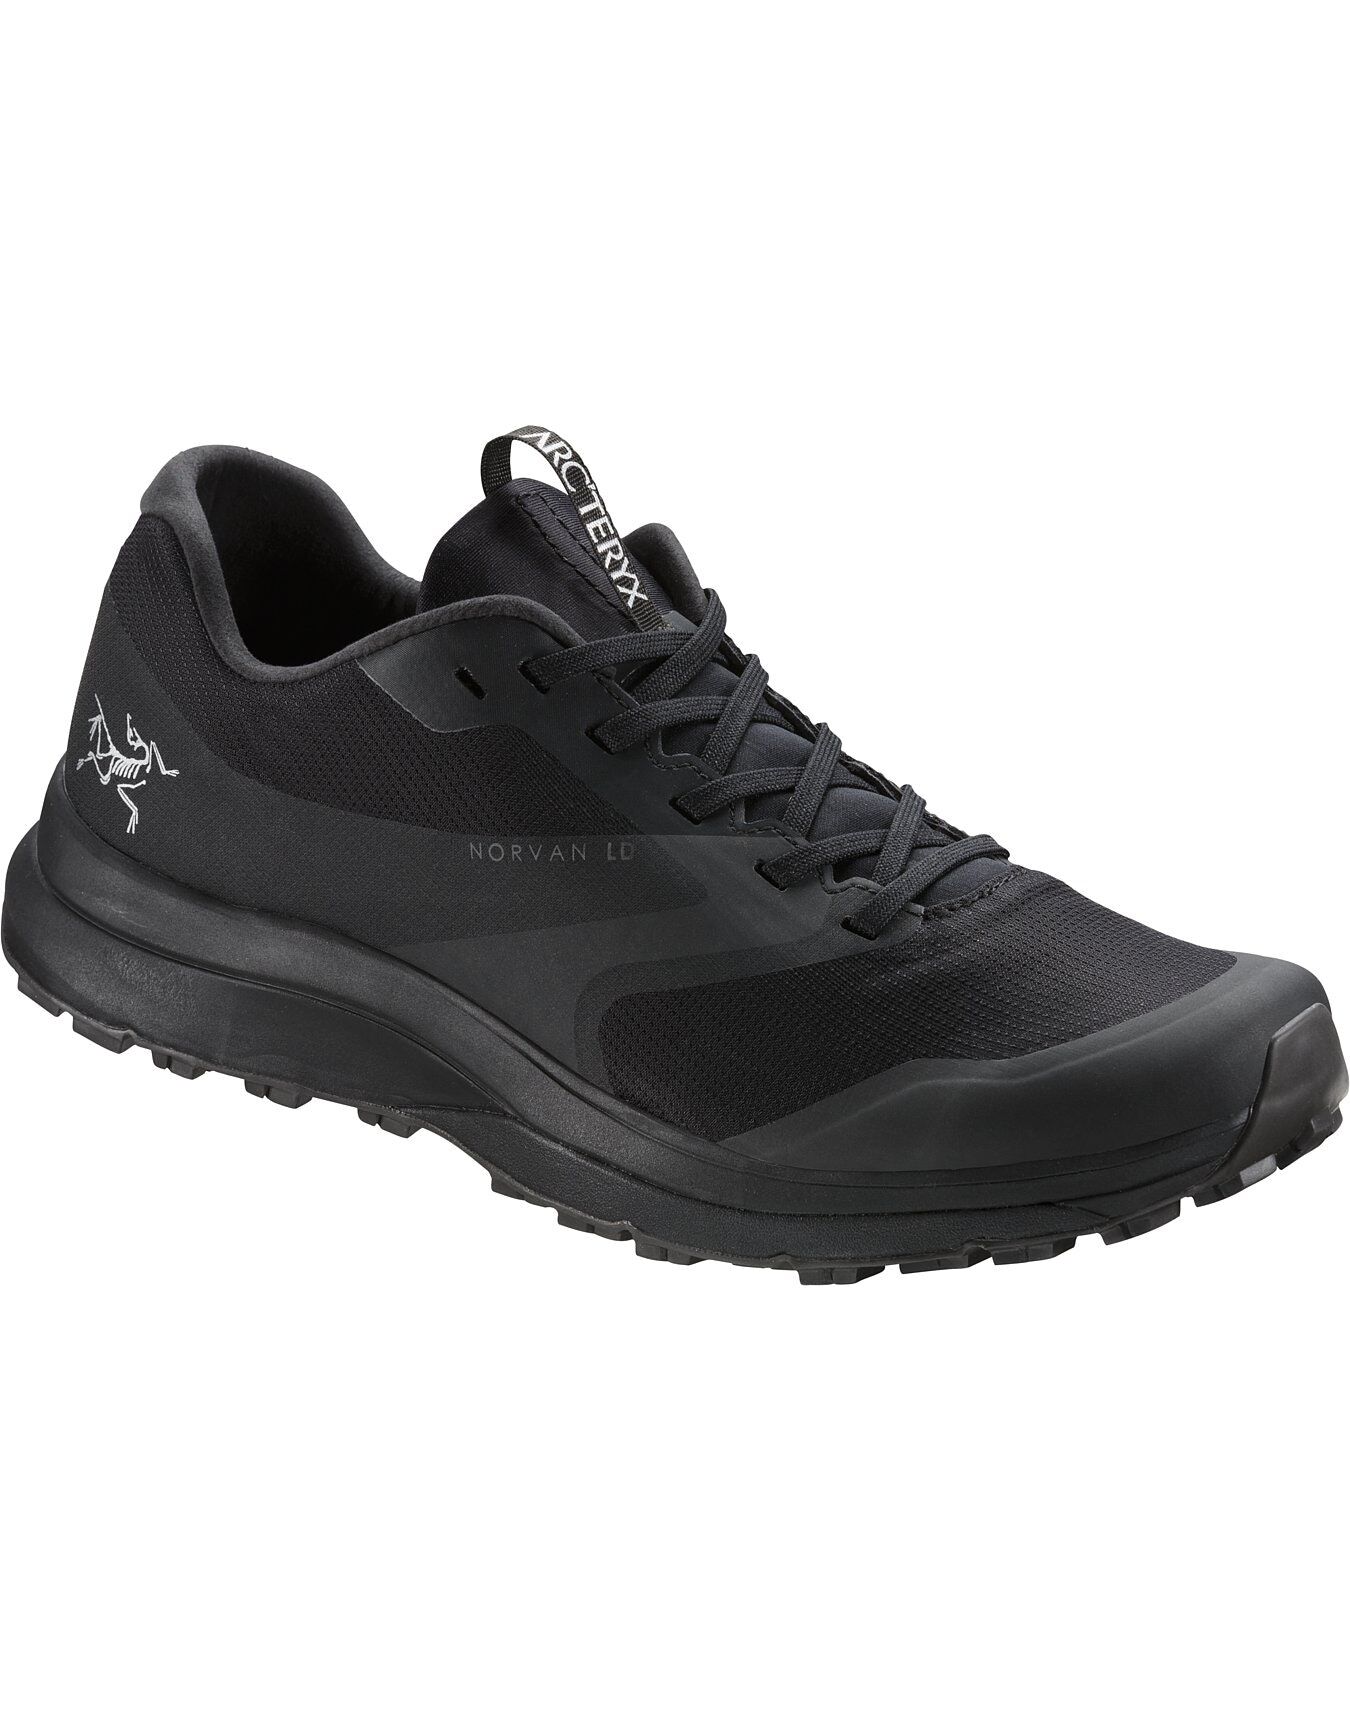 Arc'teryx Norvan LD GTX - Trail running shoes - Men's